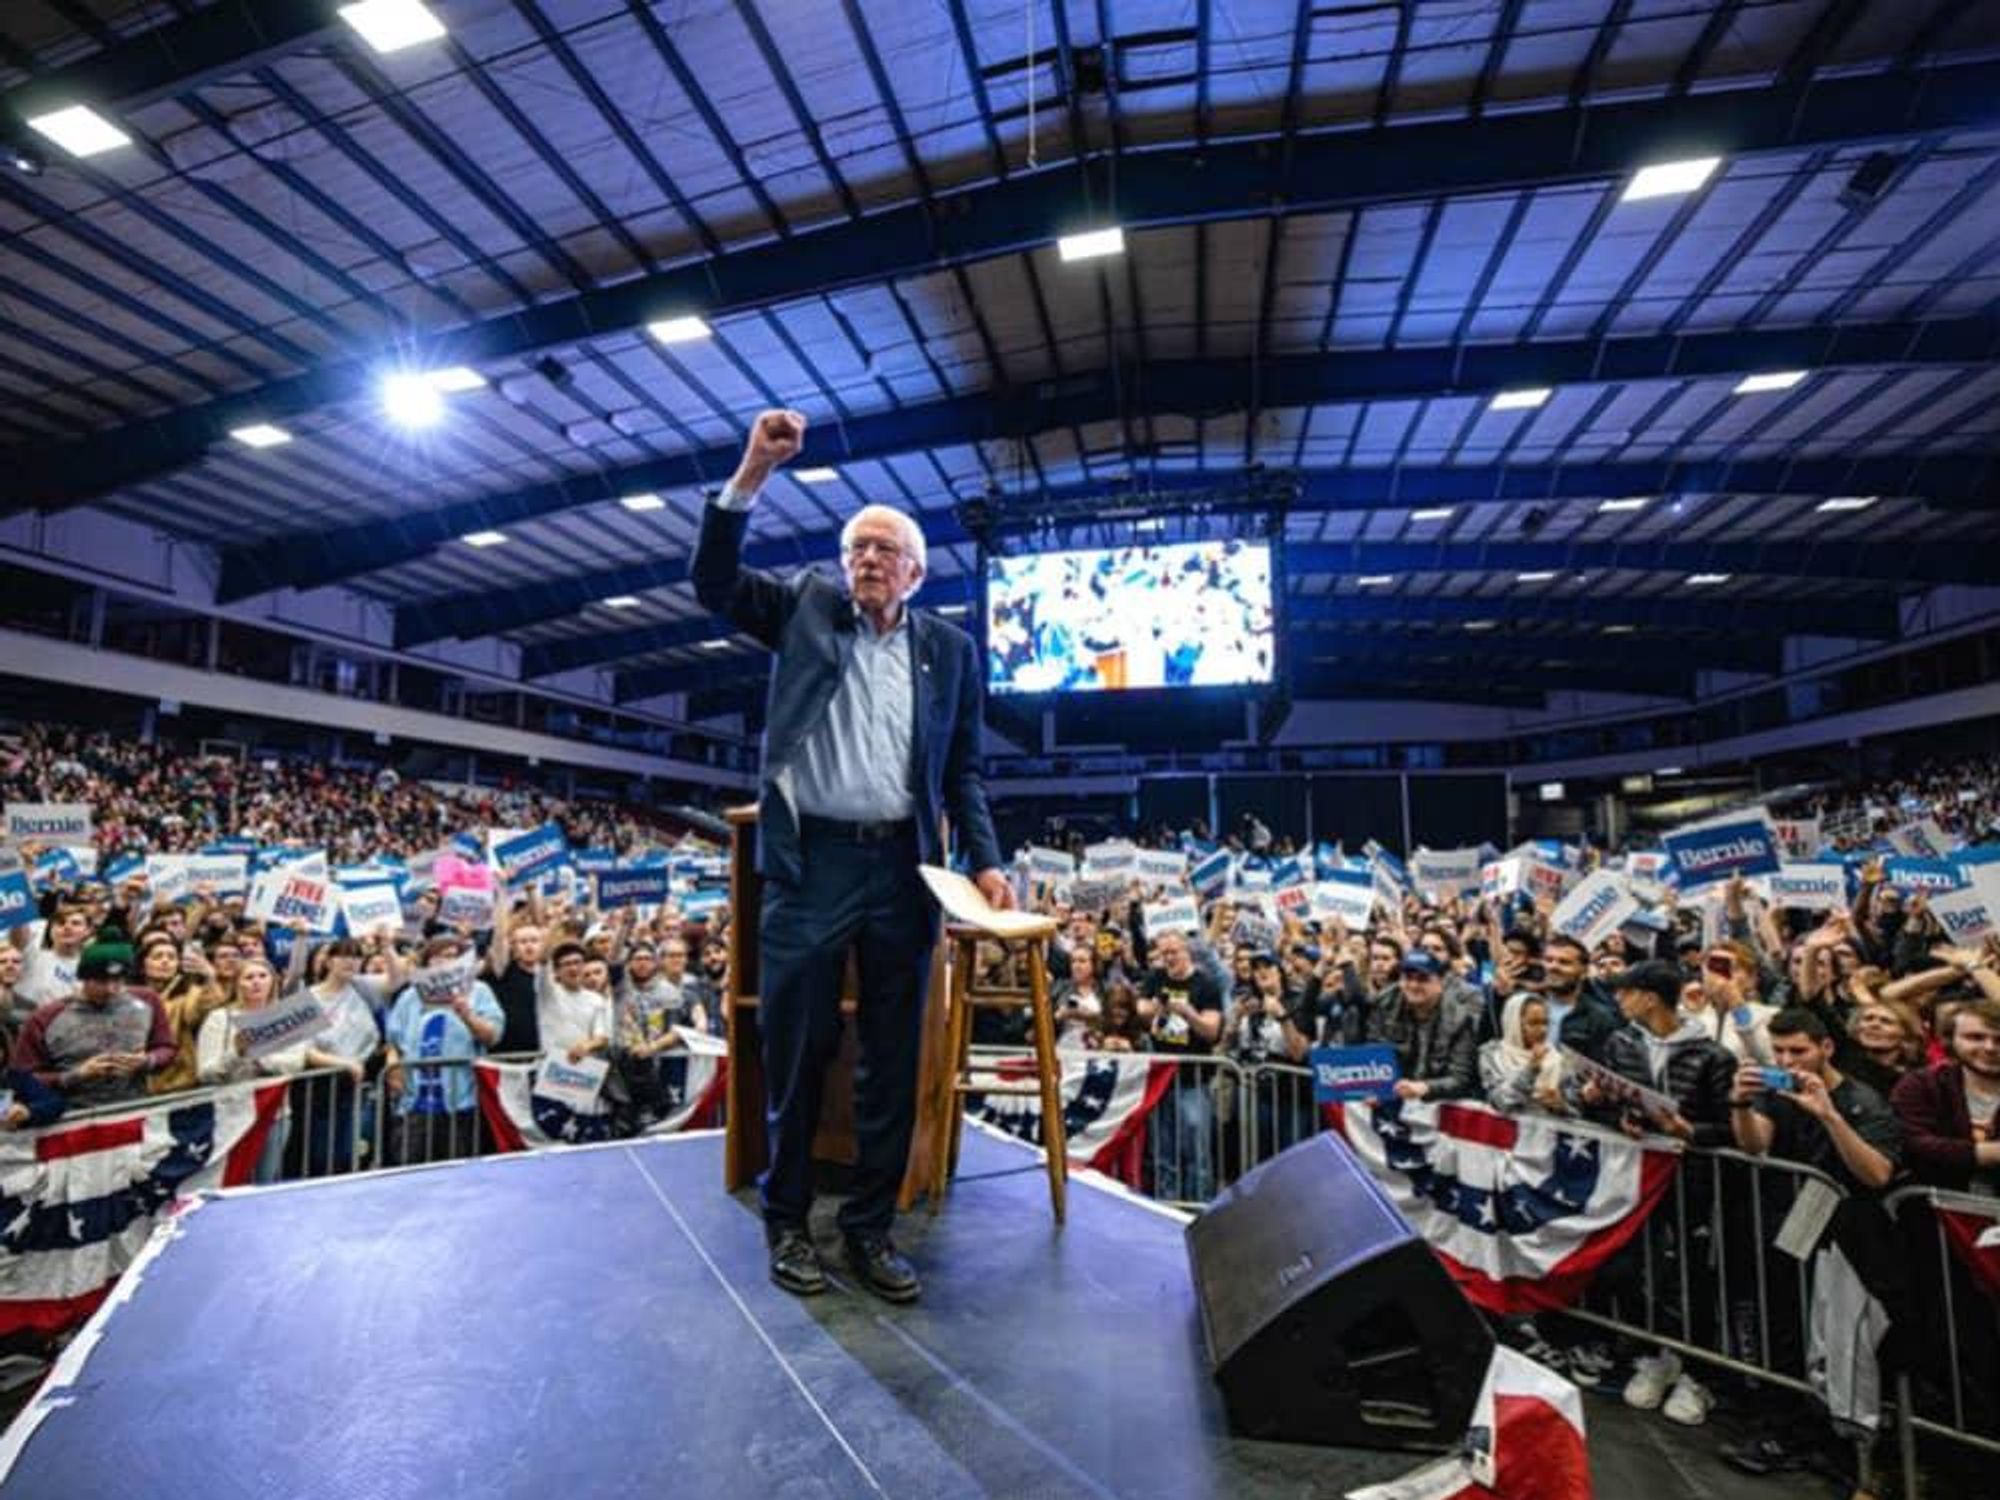 Bernie Sanders rally